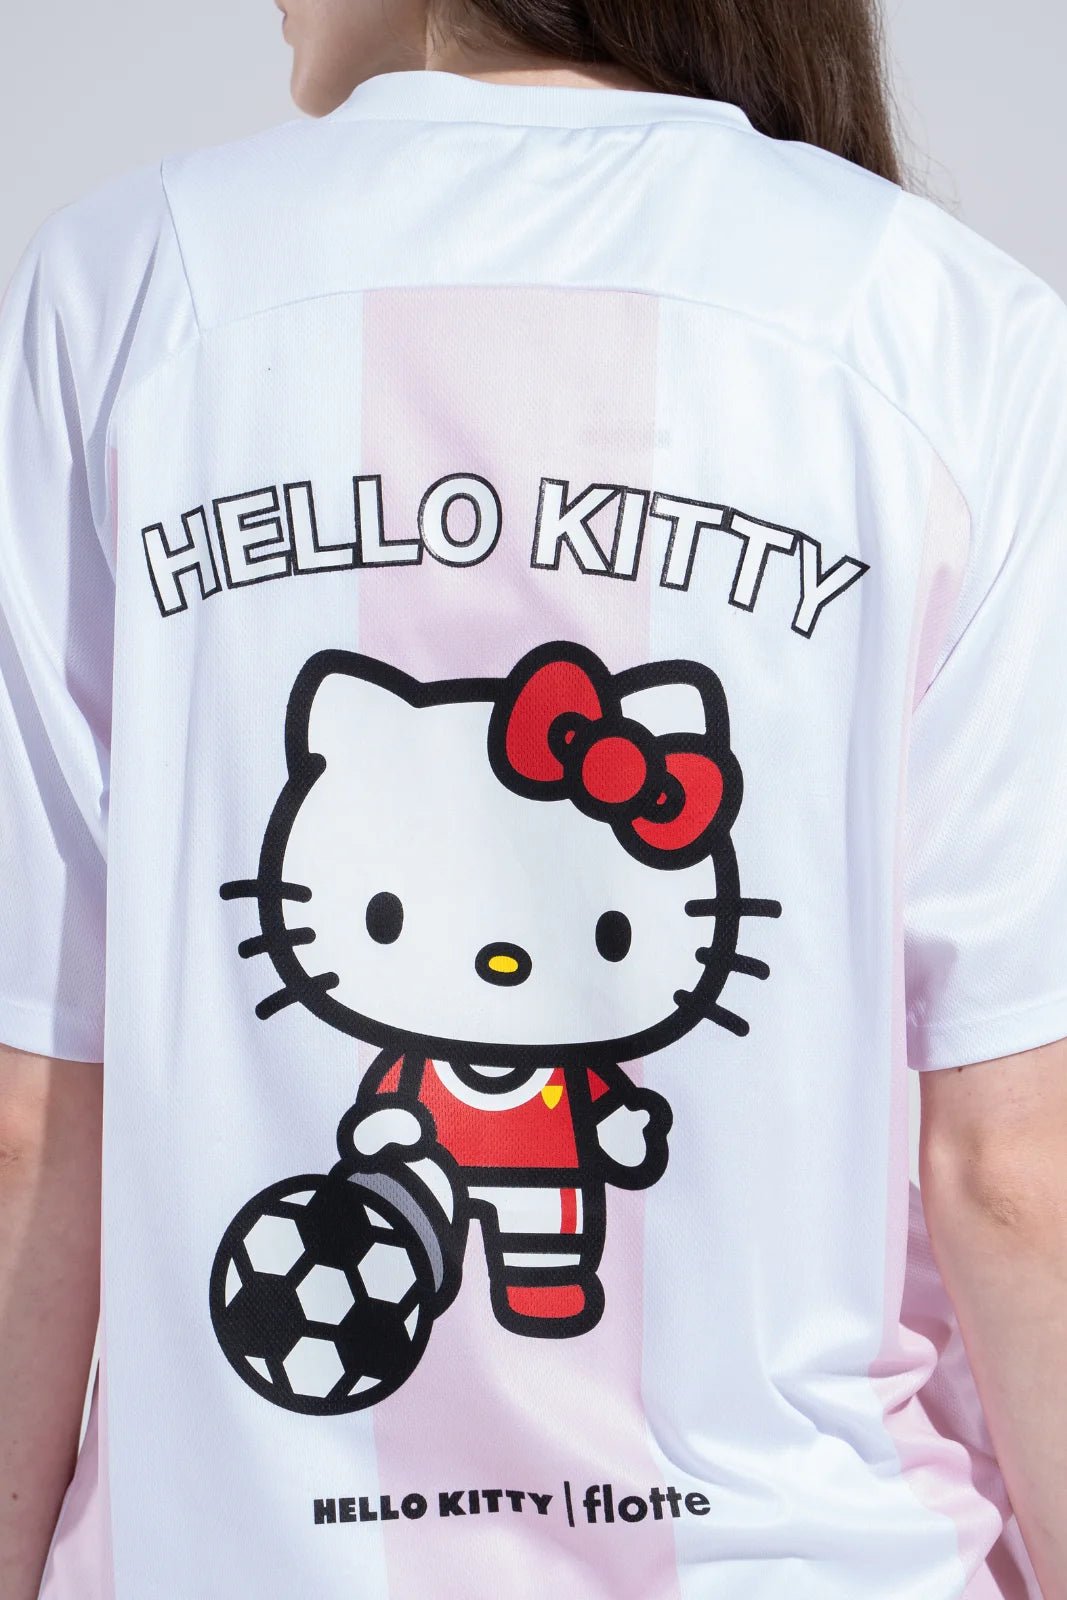 St. Germain - Soccer jersey - Flotte x Hello Kitty #couleur_bonbon